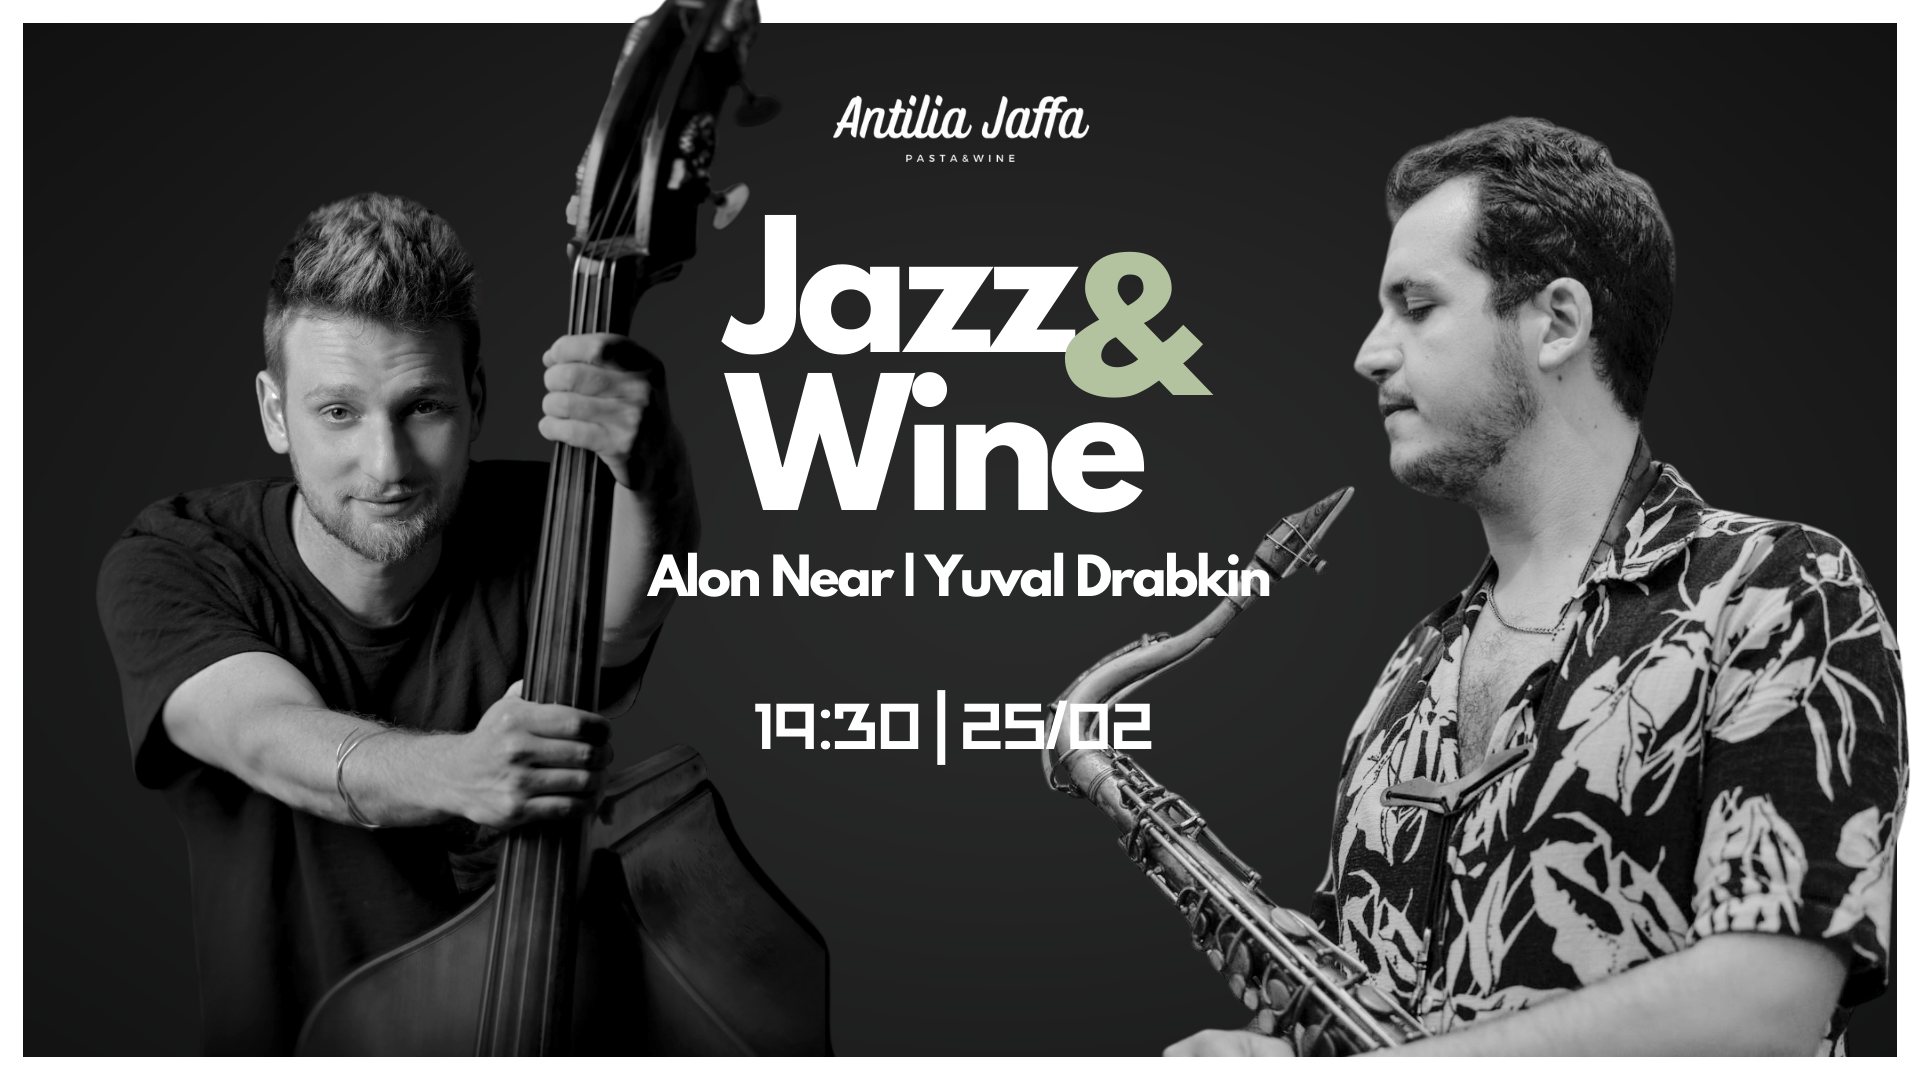 Alon Near | Yuval Drabkin - Jazz, Pasta & wine @ Antilia Jaffa